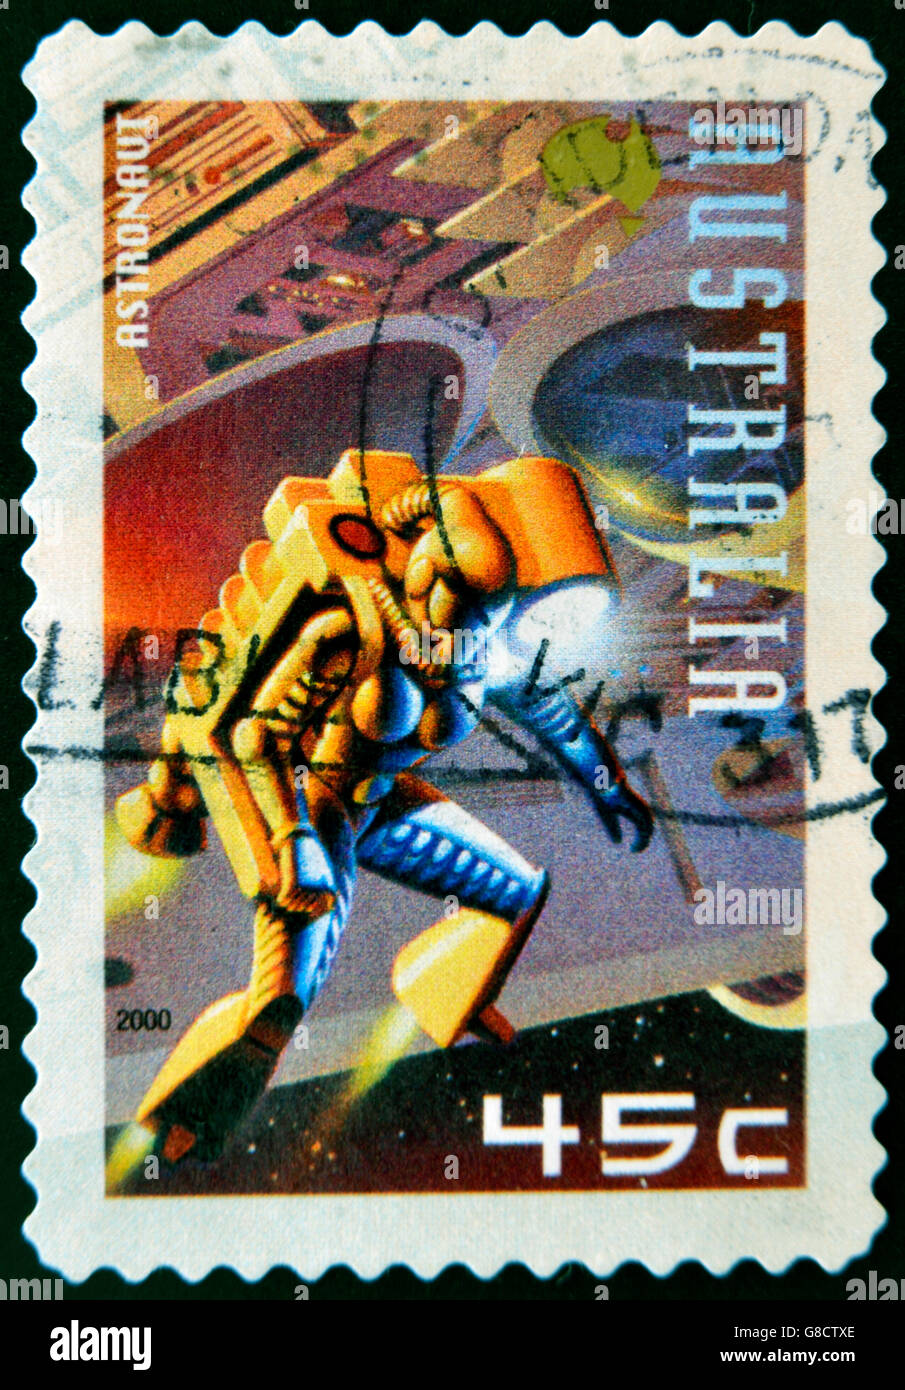 AUSTRALIA - CIRCA 2000: A stamp printed in Australia shows astronaut, circa 2000 Stock Photo